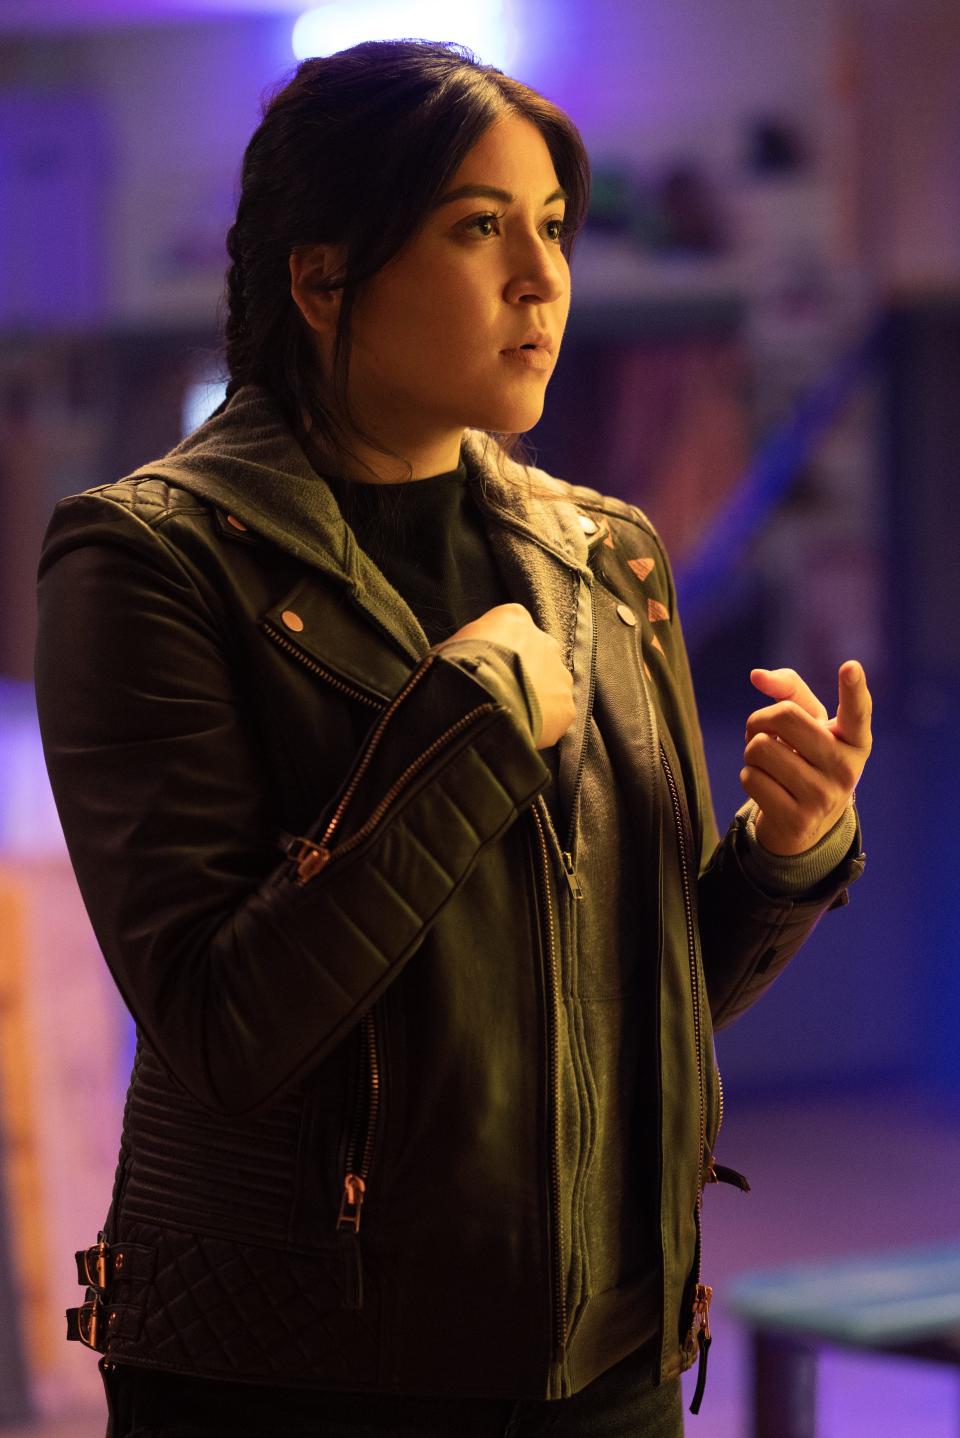 Alaqua Cox also played Maya Lopez (Echo) in the Disney+ series "Hawkeye.”